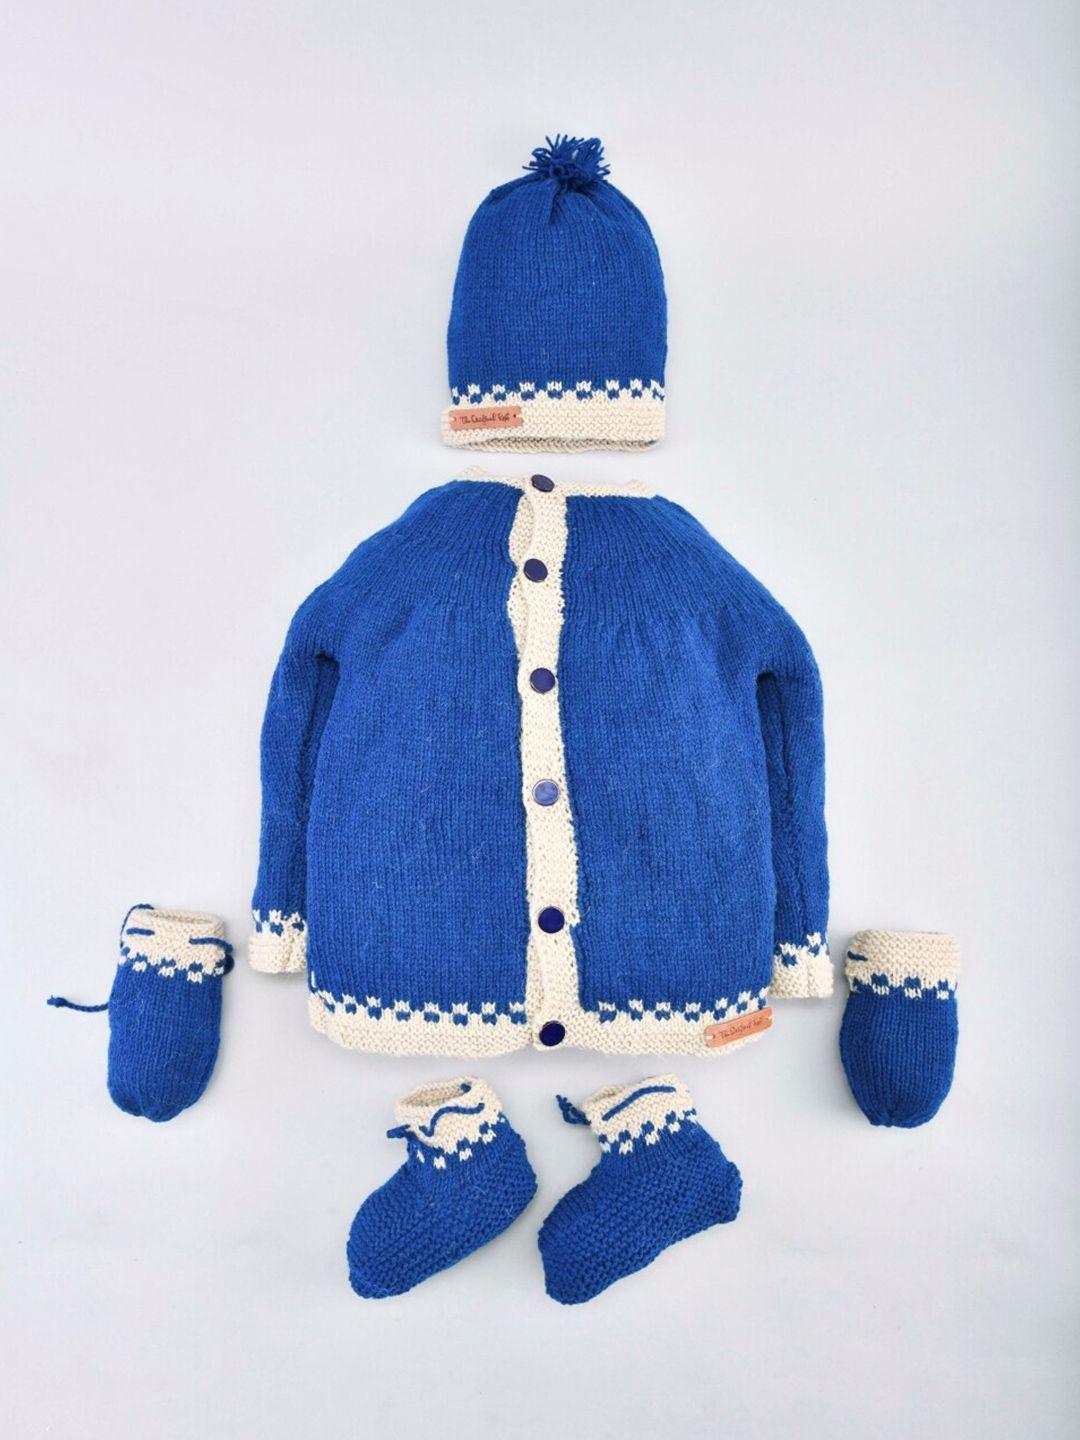 the original knit unisex kids blue & white cardigan